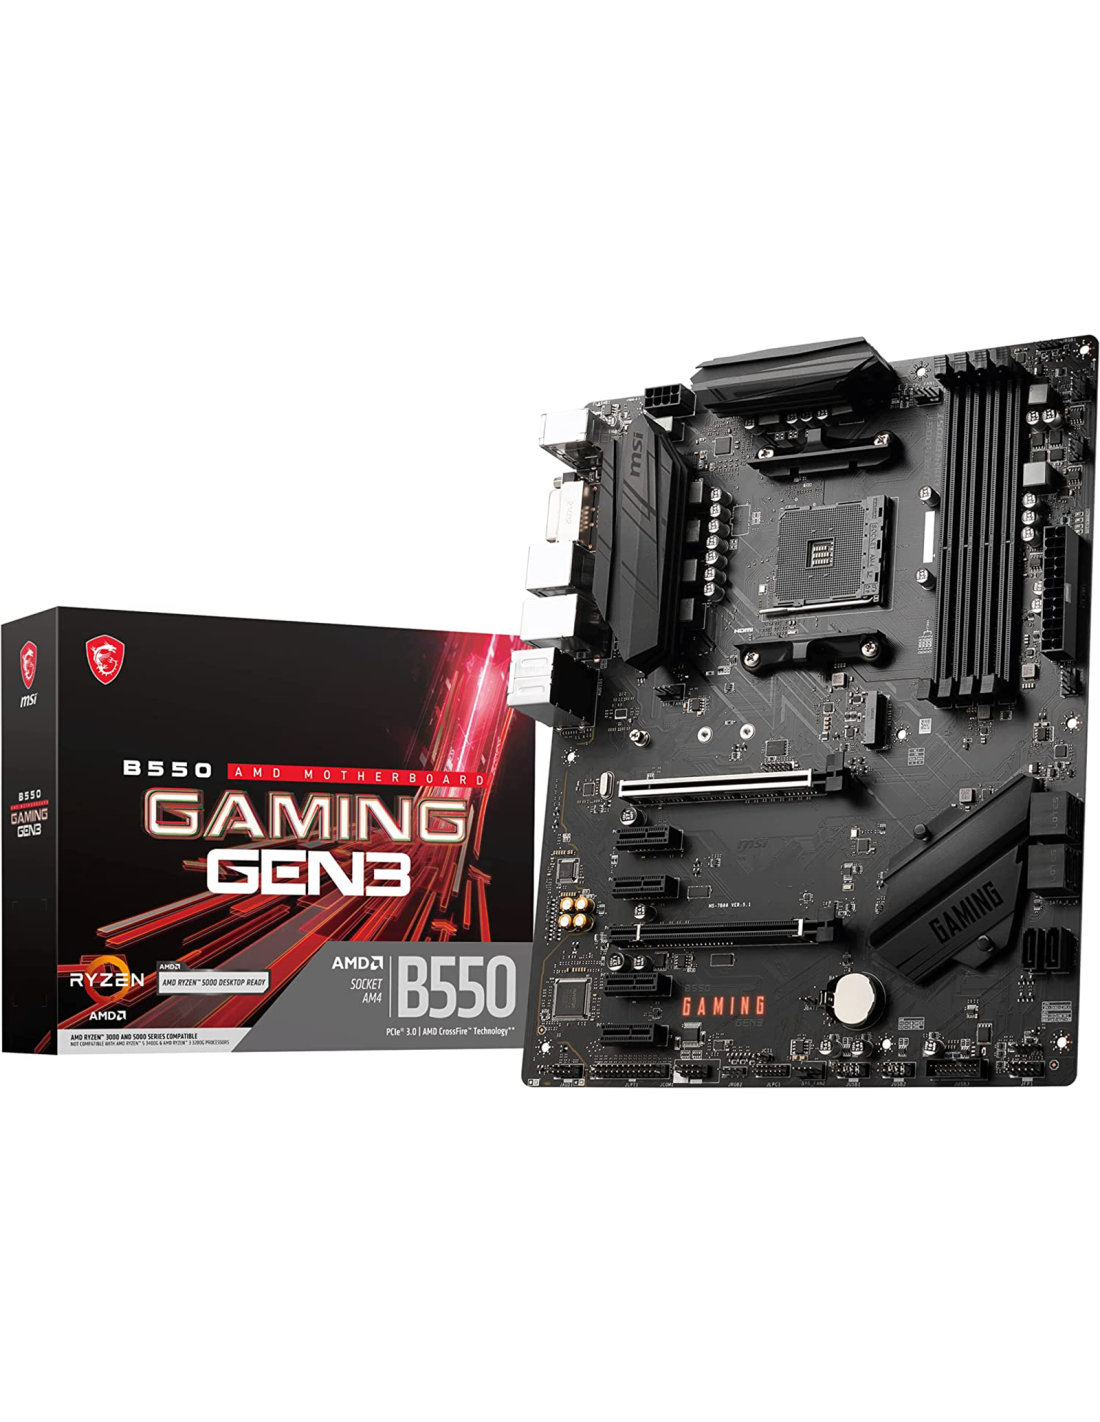 Scheda Madre MSI B550 Gaming Gen3 Socket AMD AM4